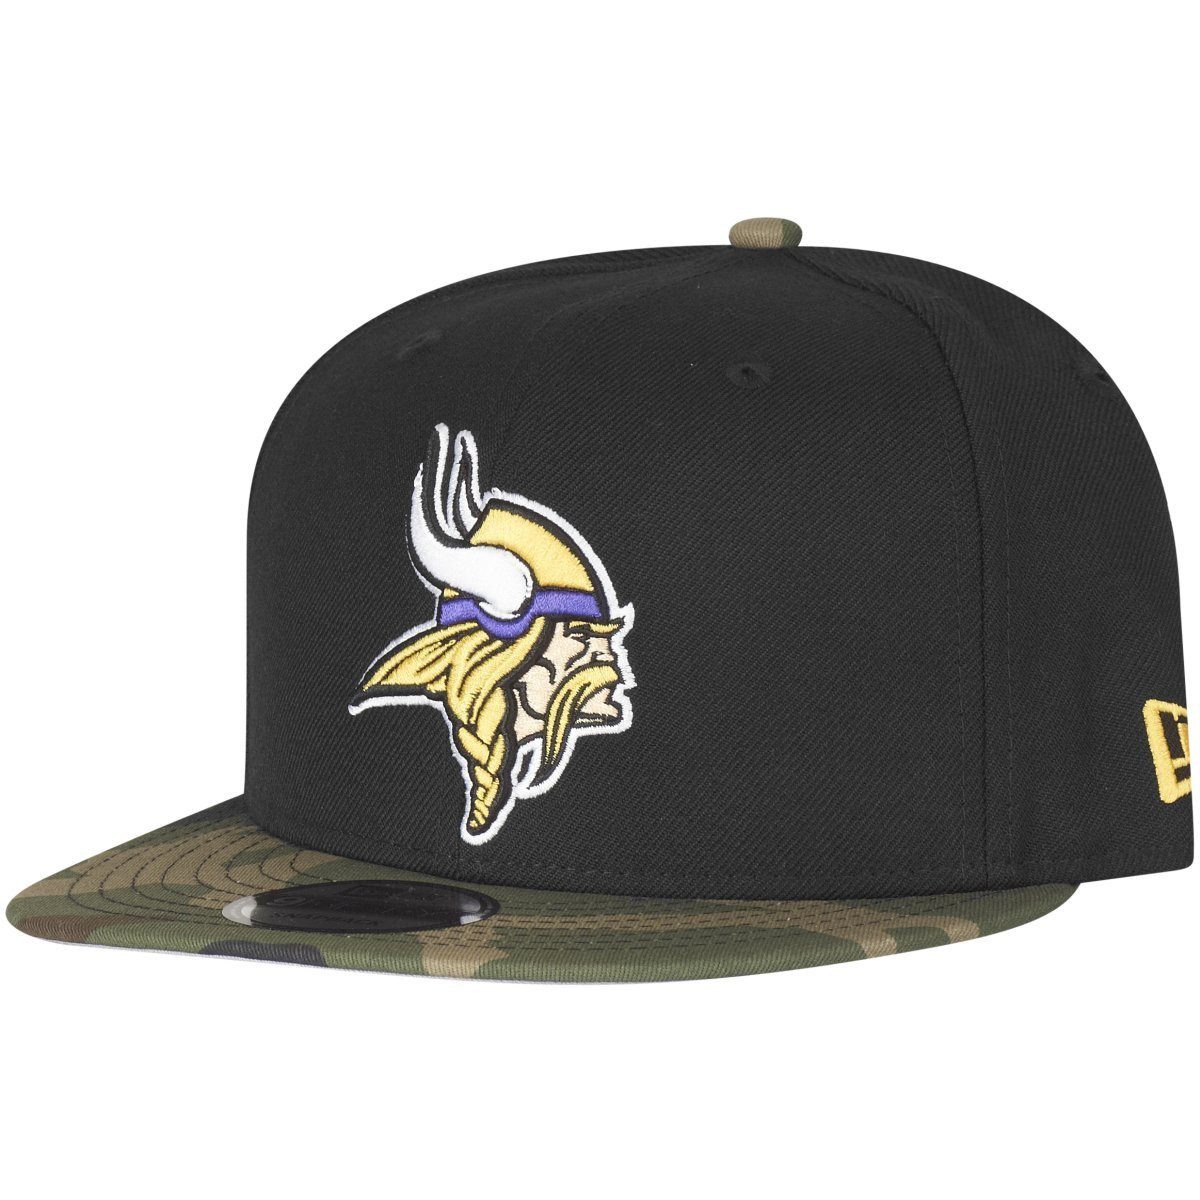 New Cap Snapback Vikings Minnesota 9Fifty Era